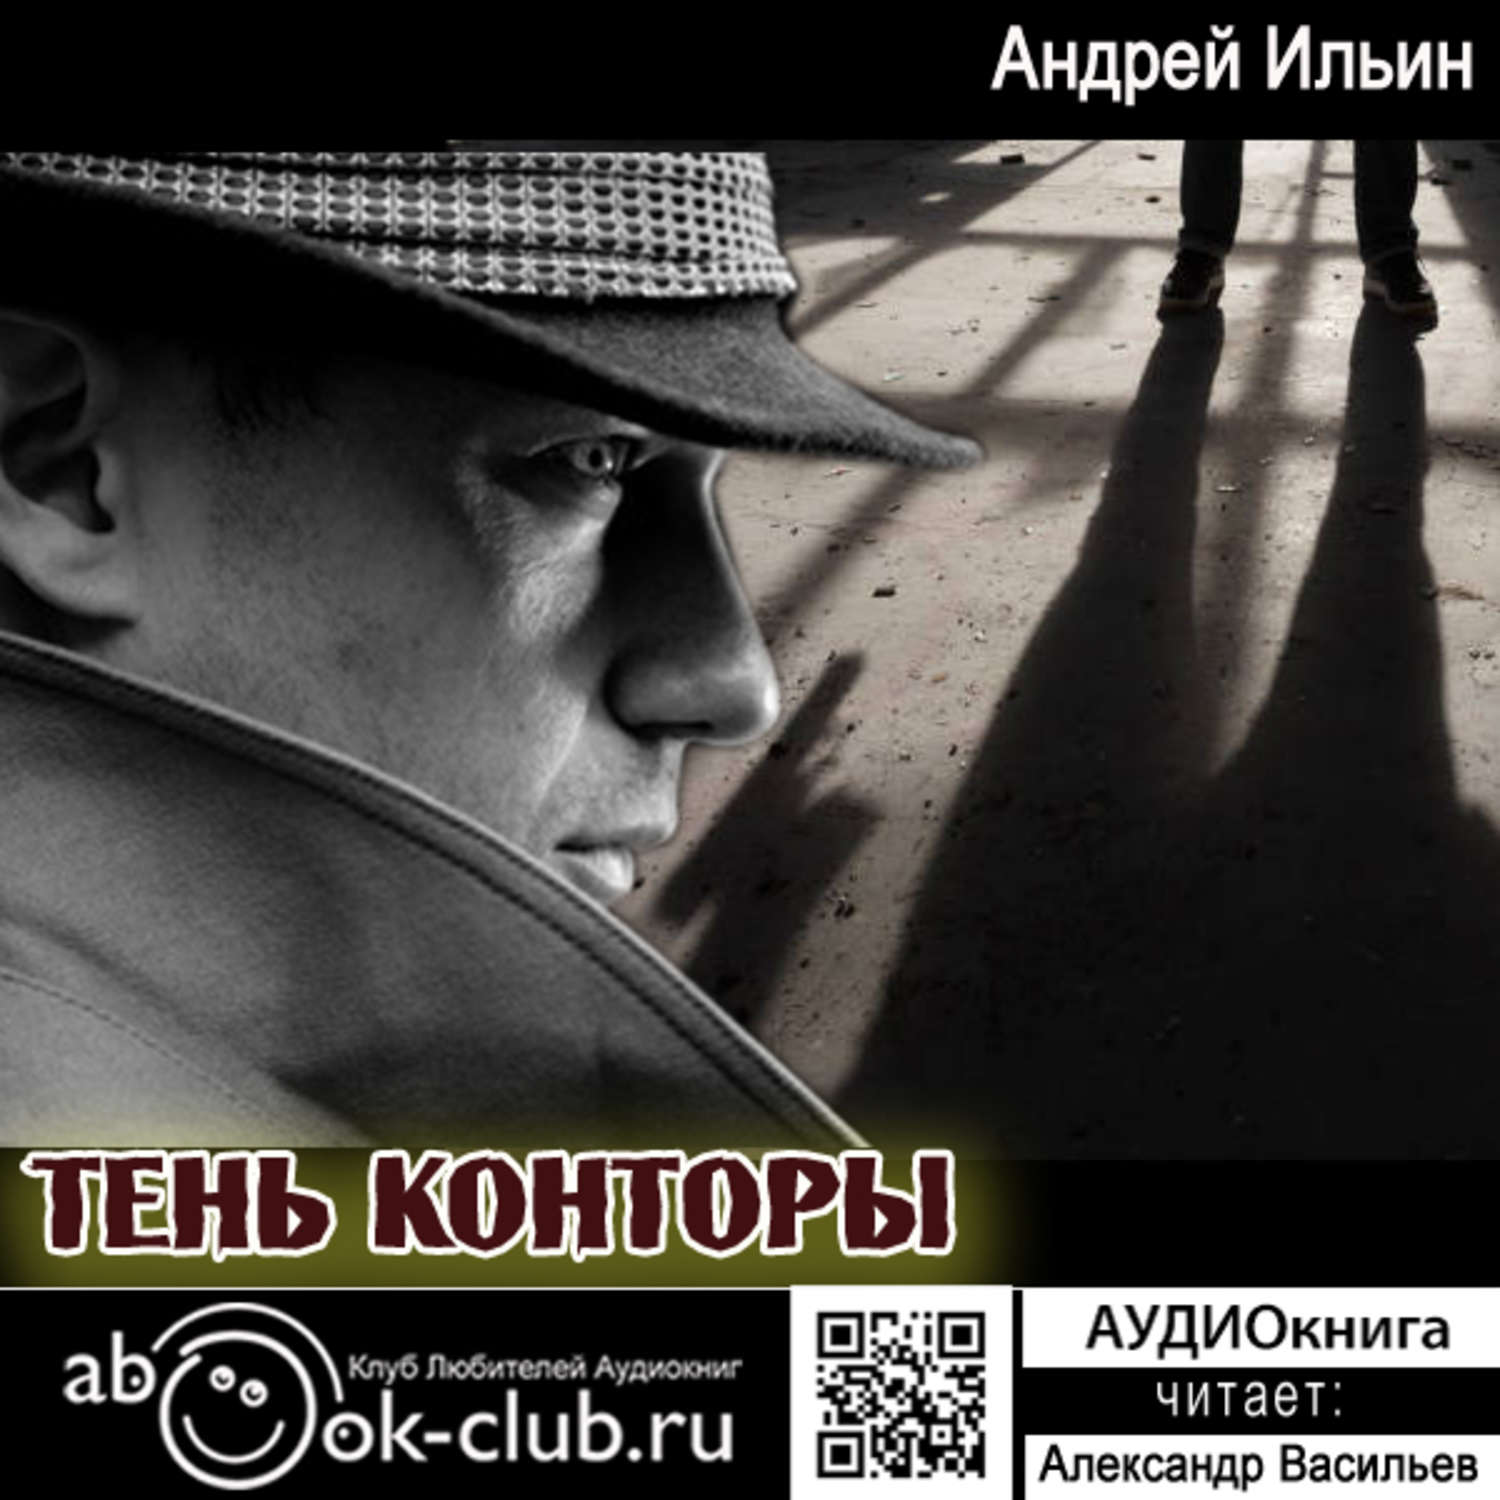 Андрей Ильин обет молчания